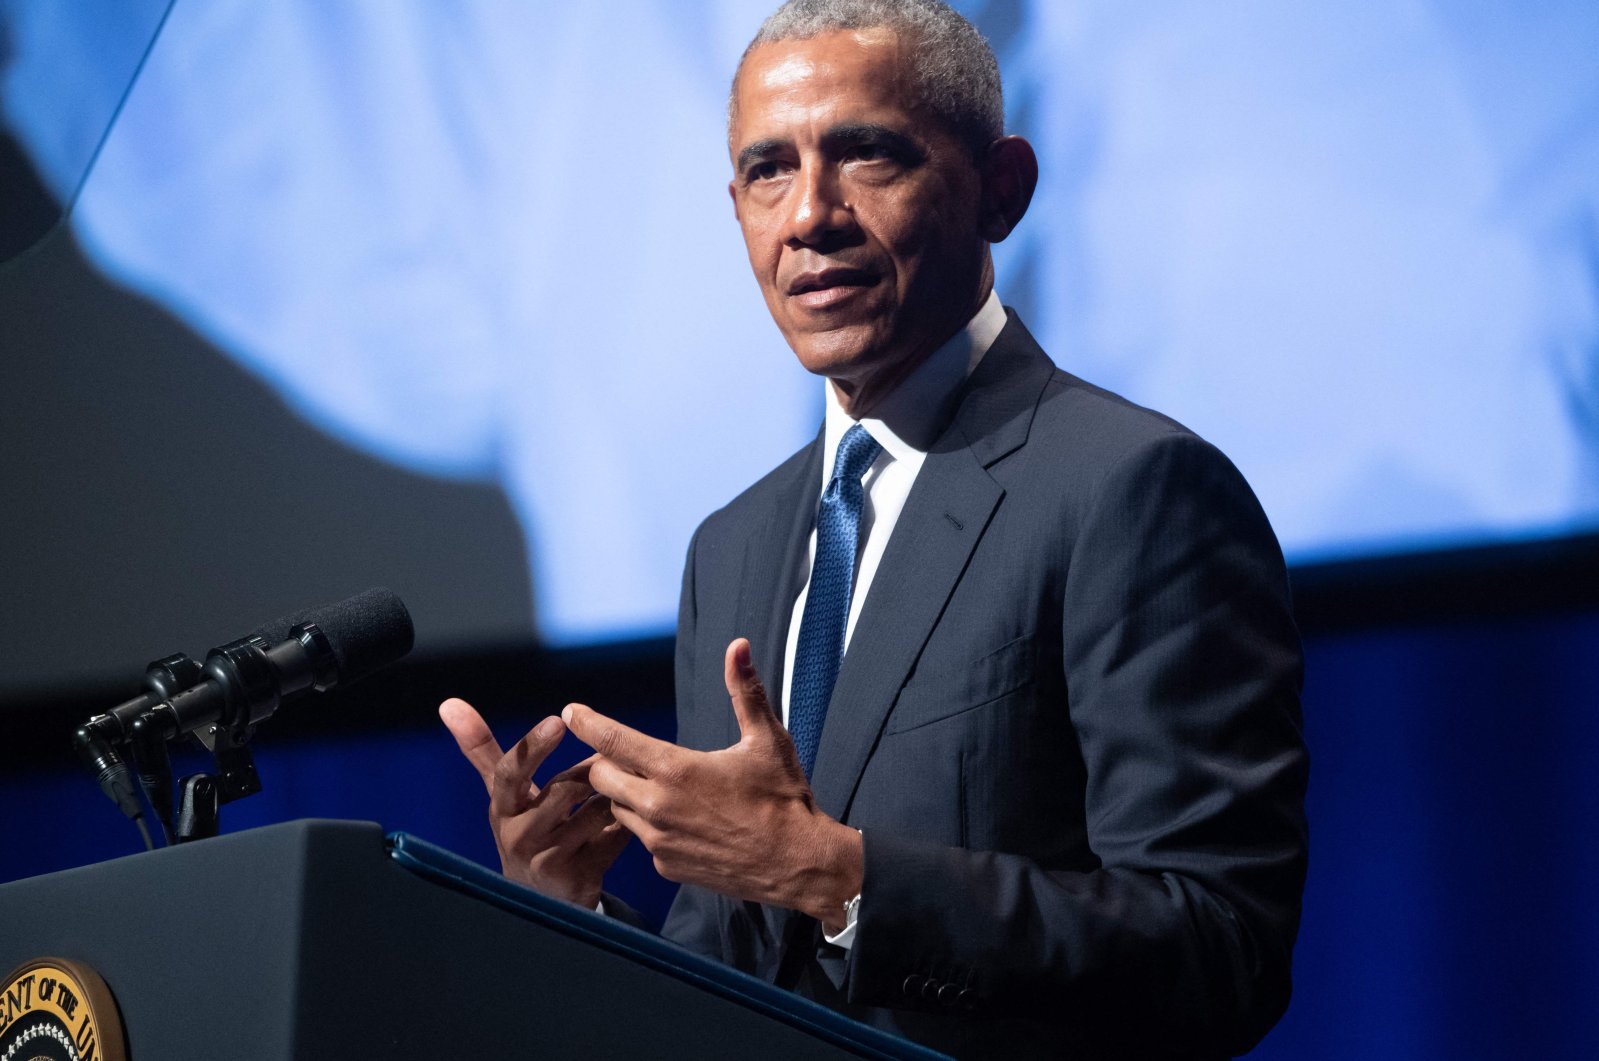 Mantan Presiden AS Obama dinyatakan positif COVID-19